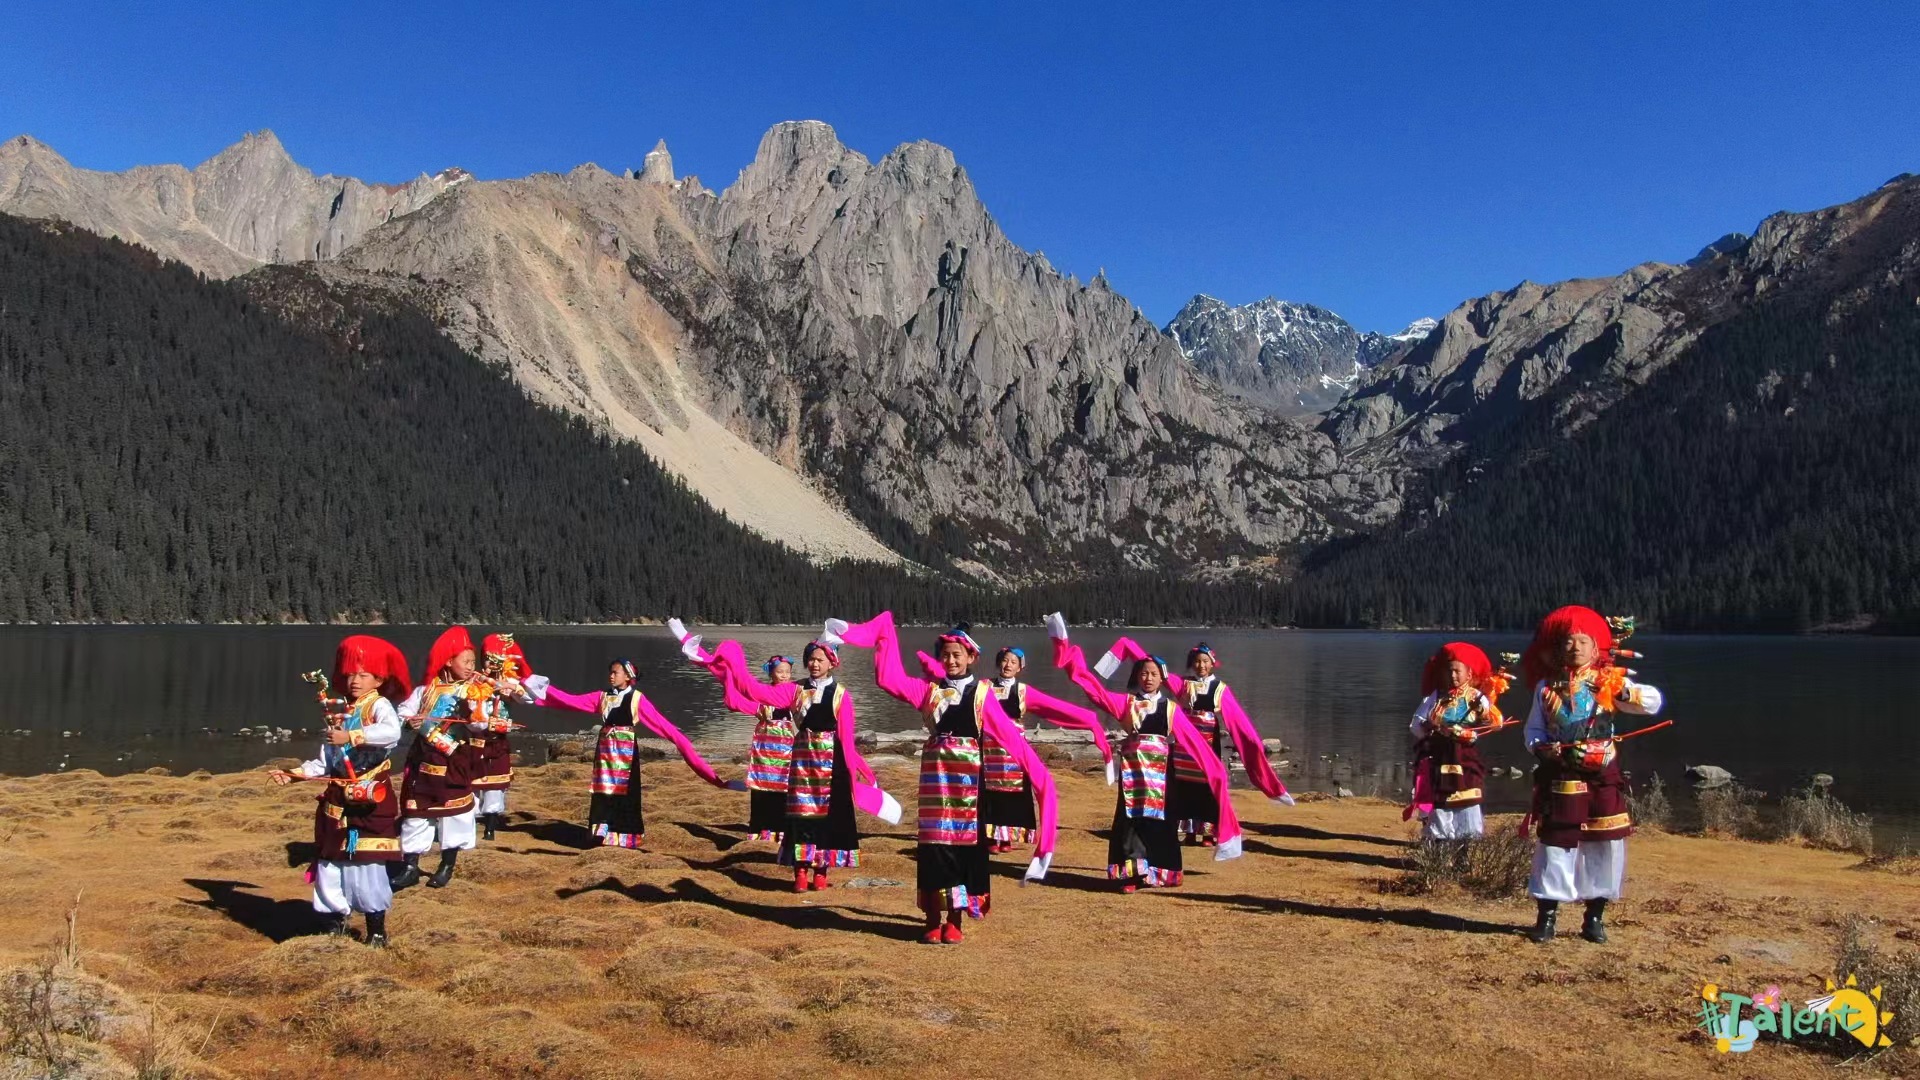 Primary school students perform the Xianzi dance on the alpine grassland in Batang County, Tibetan Autonomous Prefecture of Garze, Southwest China's Sichuan Province. /CGTN